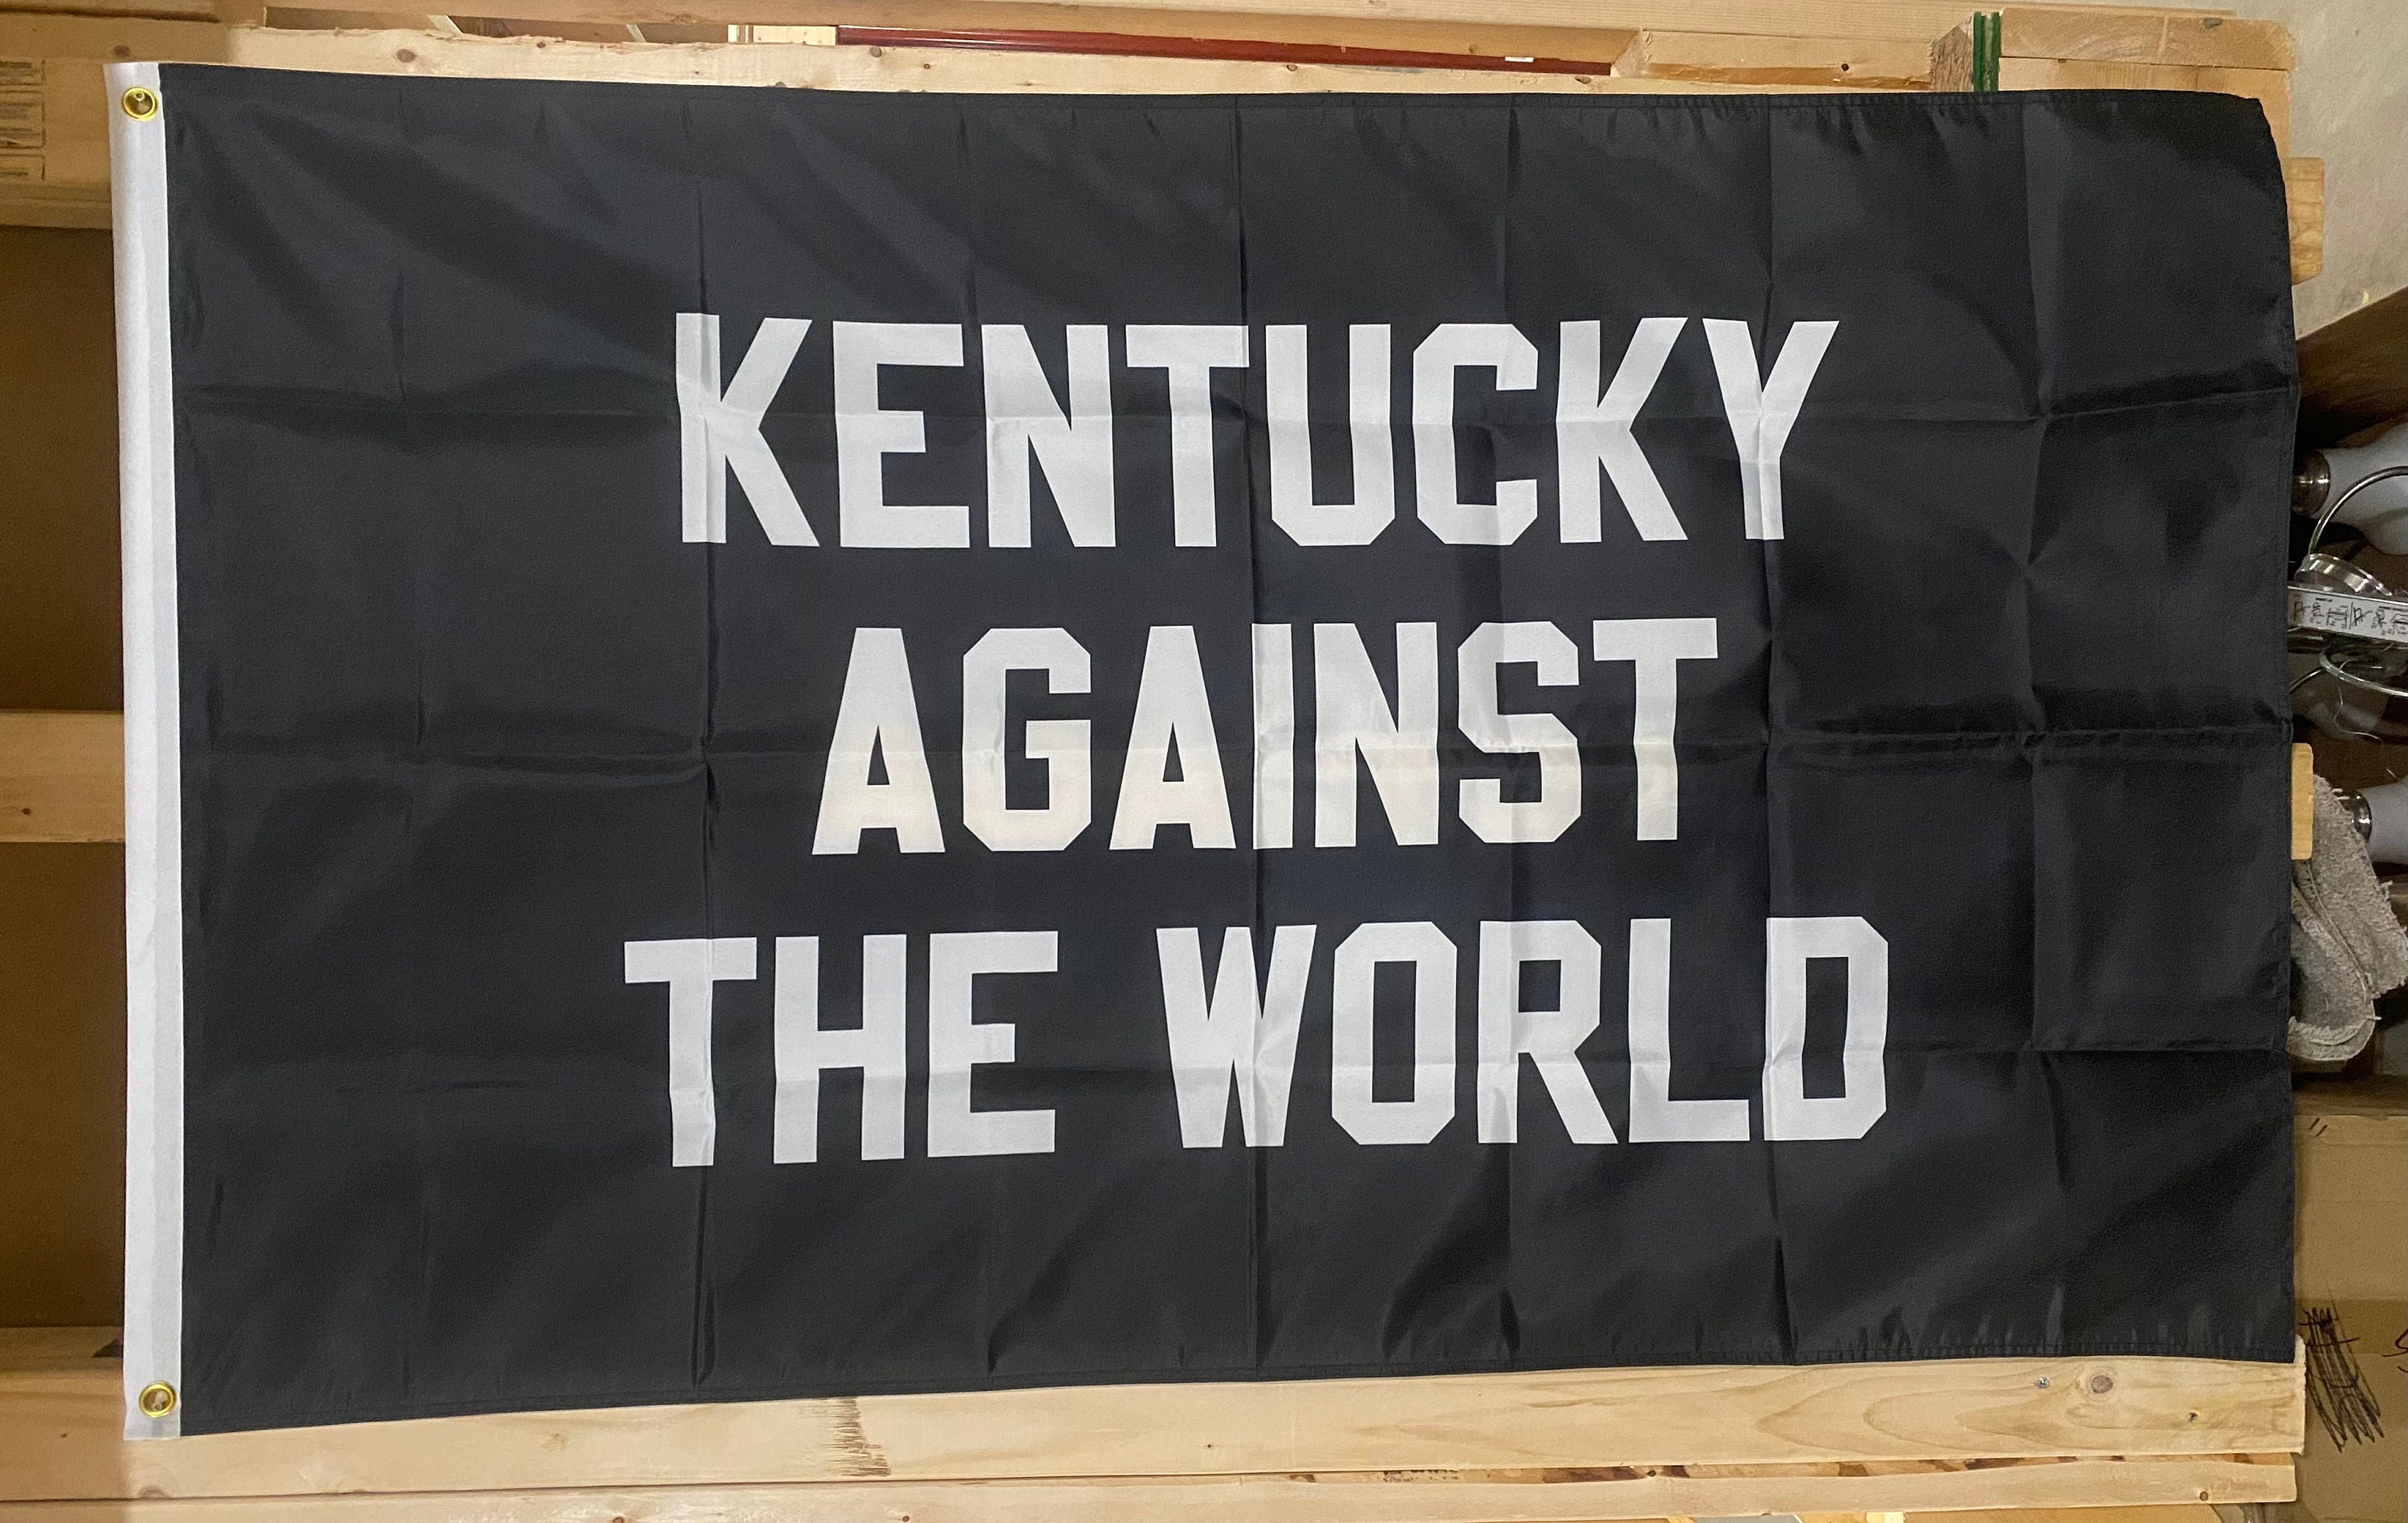 Kentucky Against The World